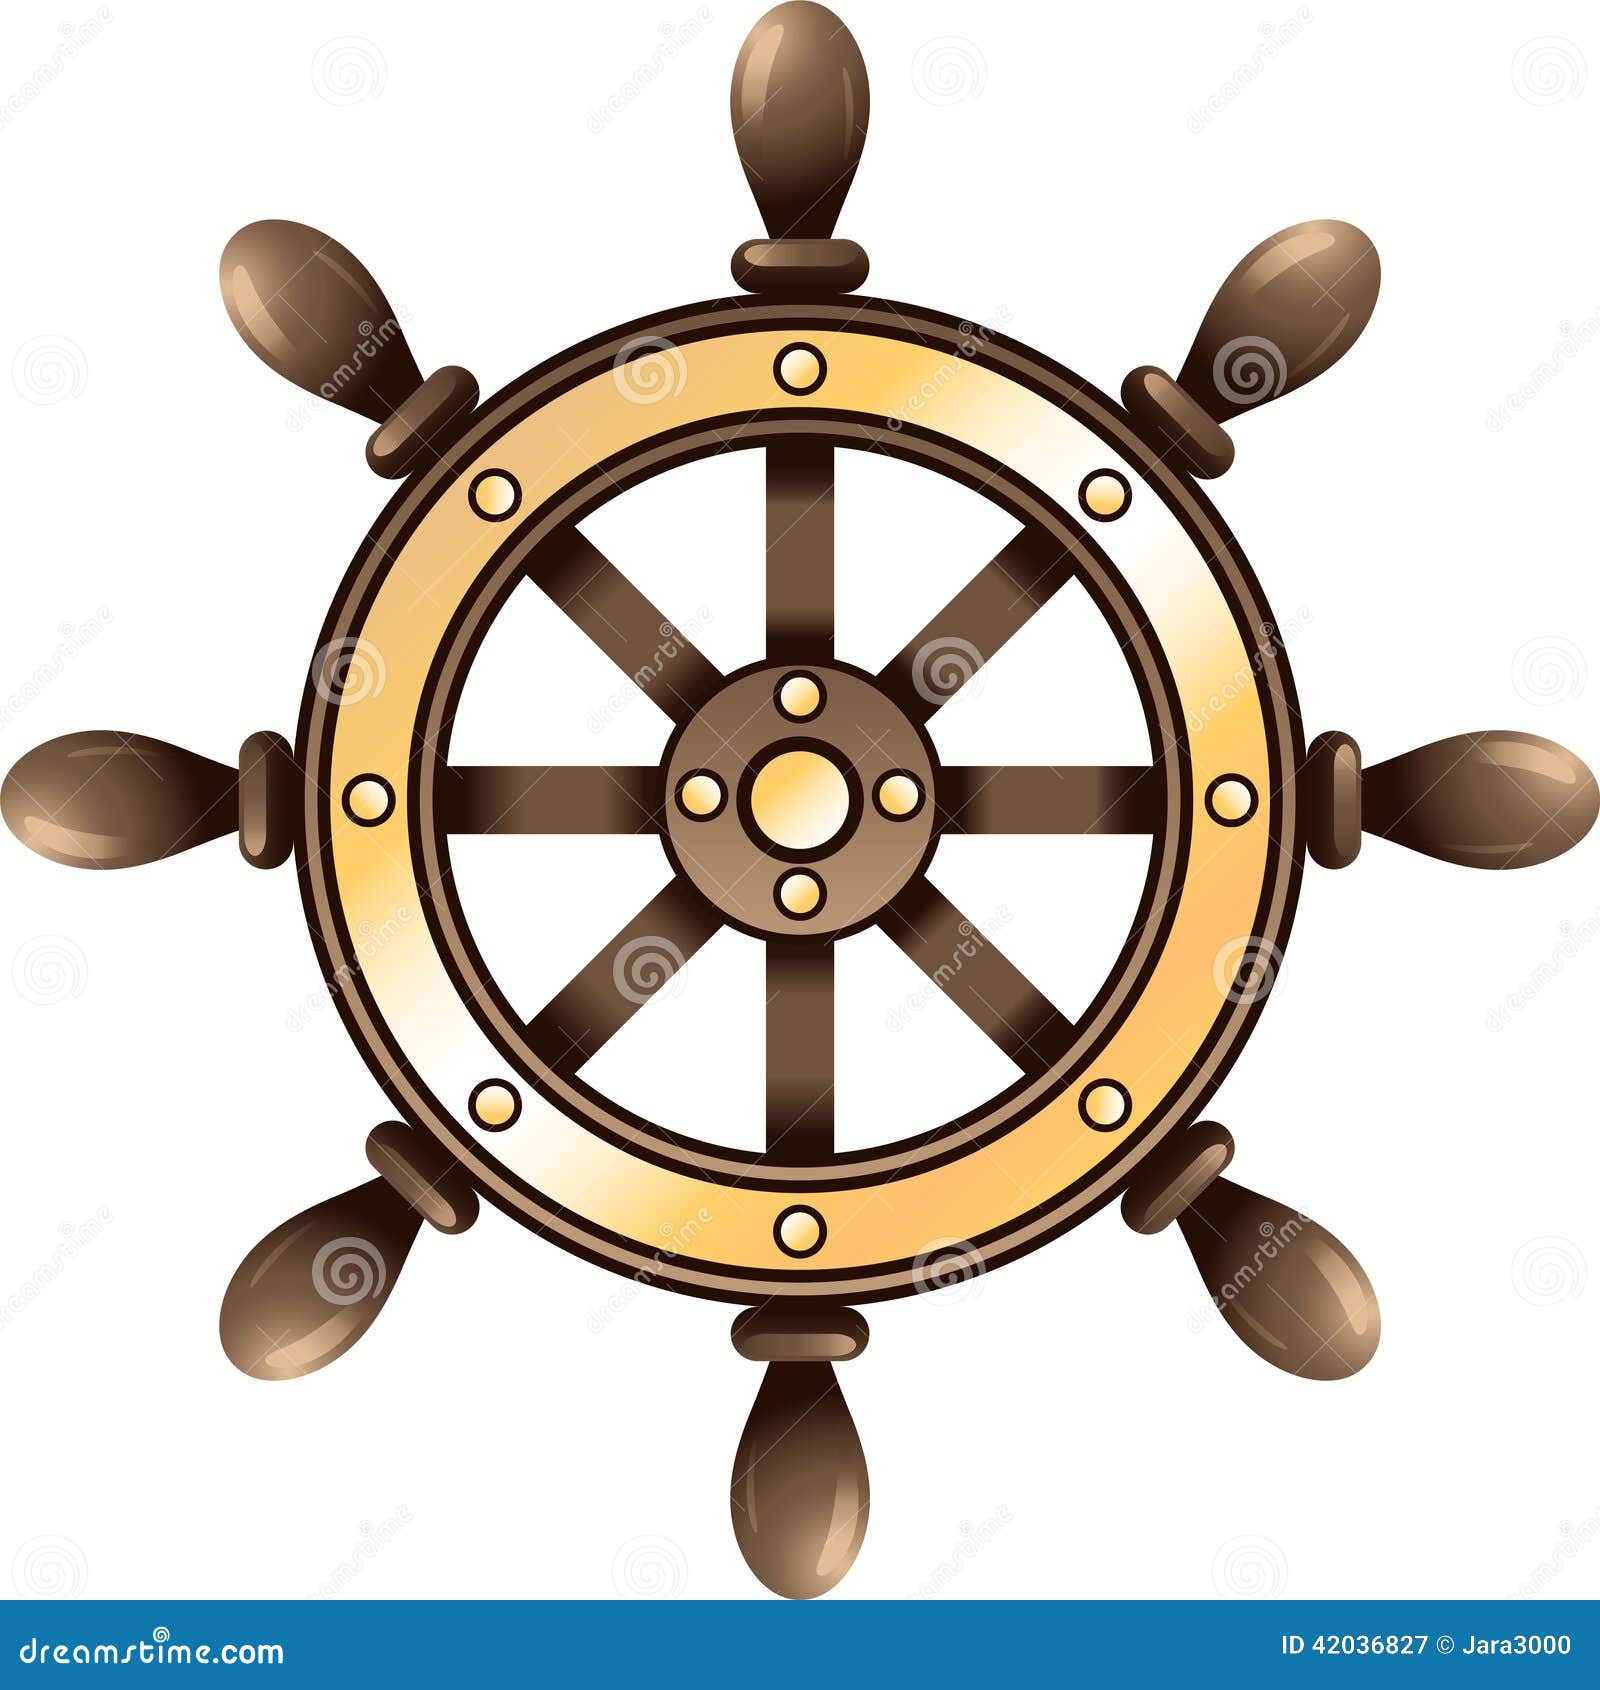 clipart ship steering wheel - photo #24